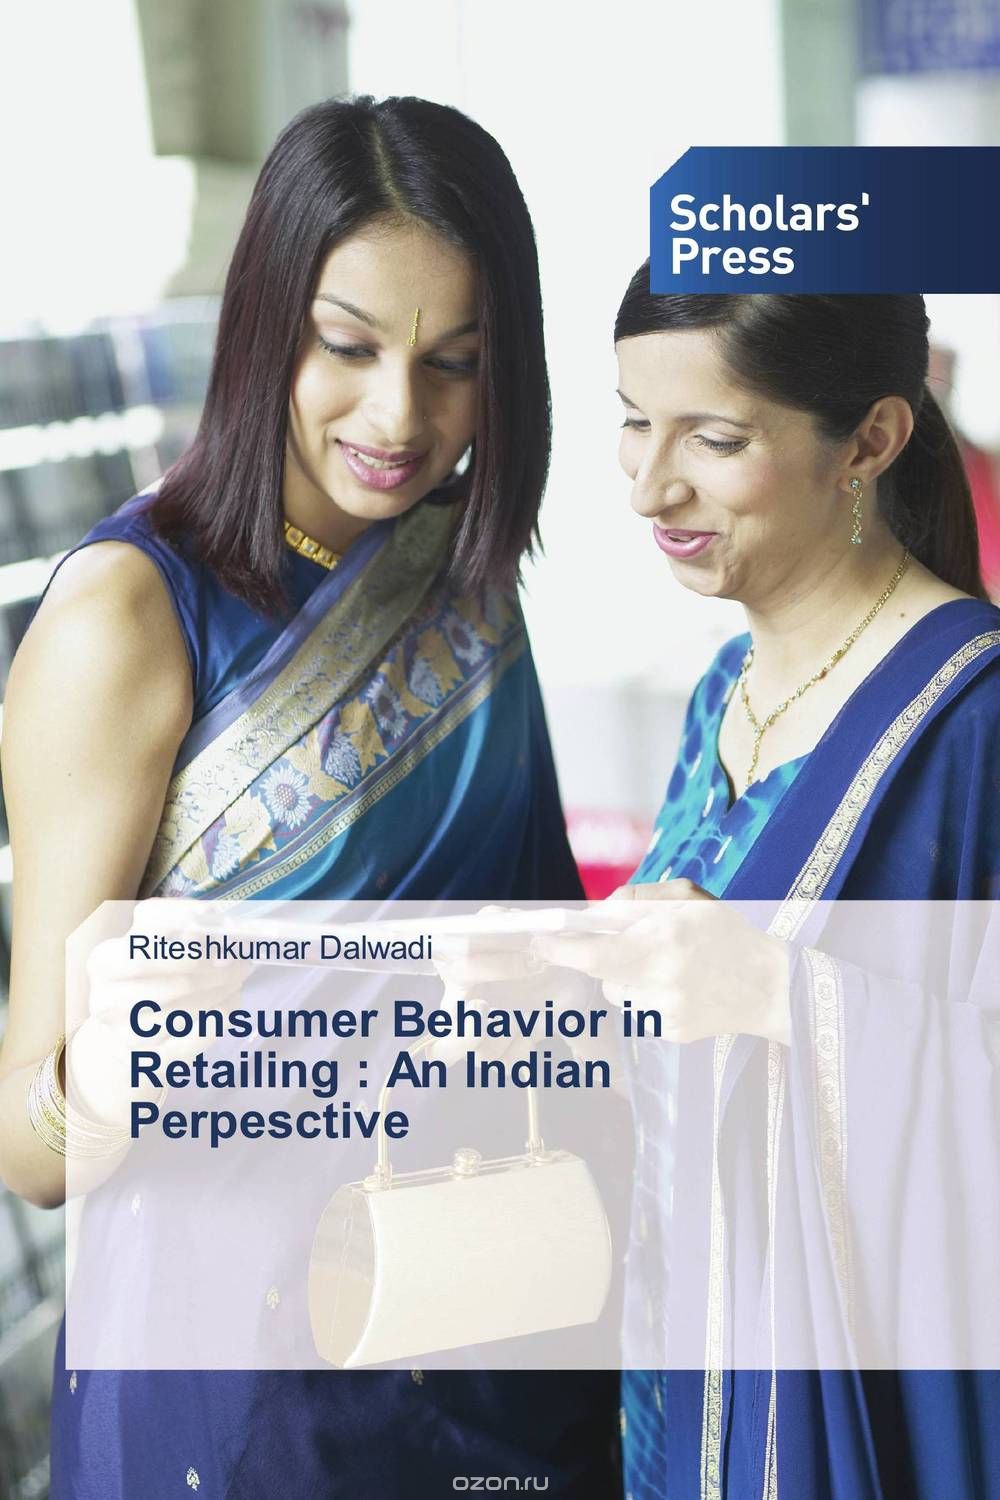 Скачать книгу "Consumer Behavior in Retailing : An Indian Perpesctive"